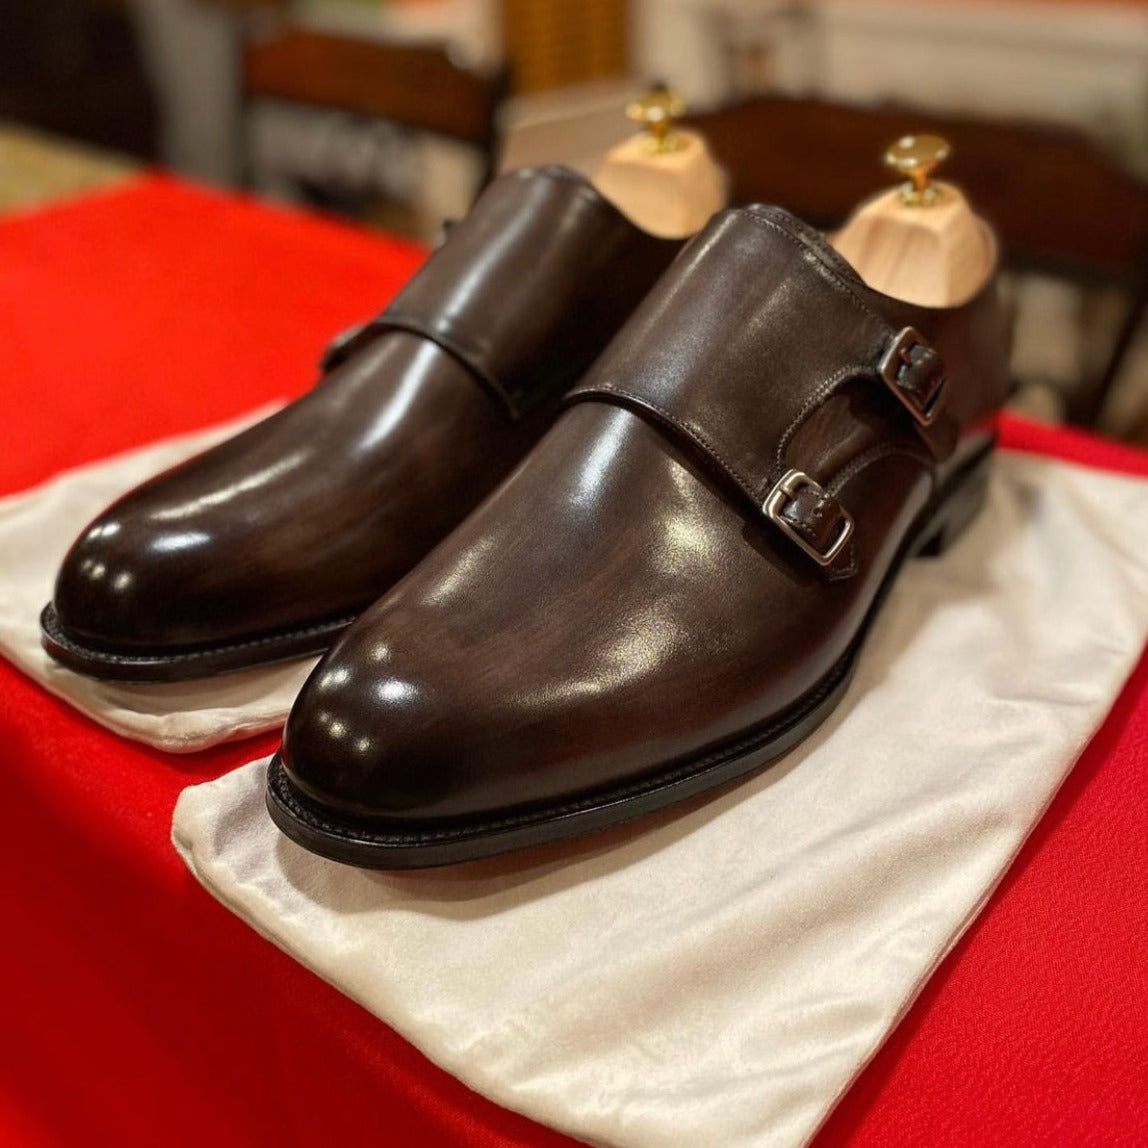 Full Bespoke Shoes for Gentlemen | Shoe Style Samples |  Studio Burke DC at IKE BEHAR | Deposit to Begin Process $250